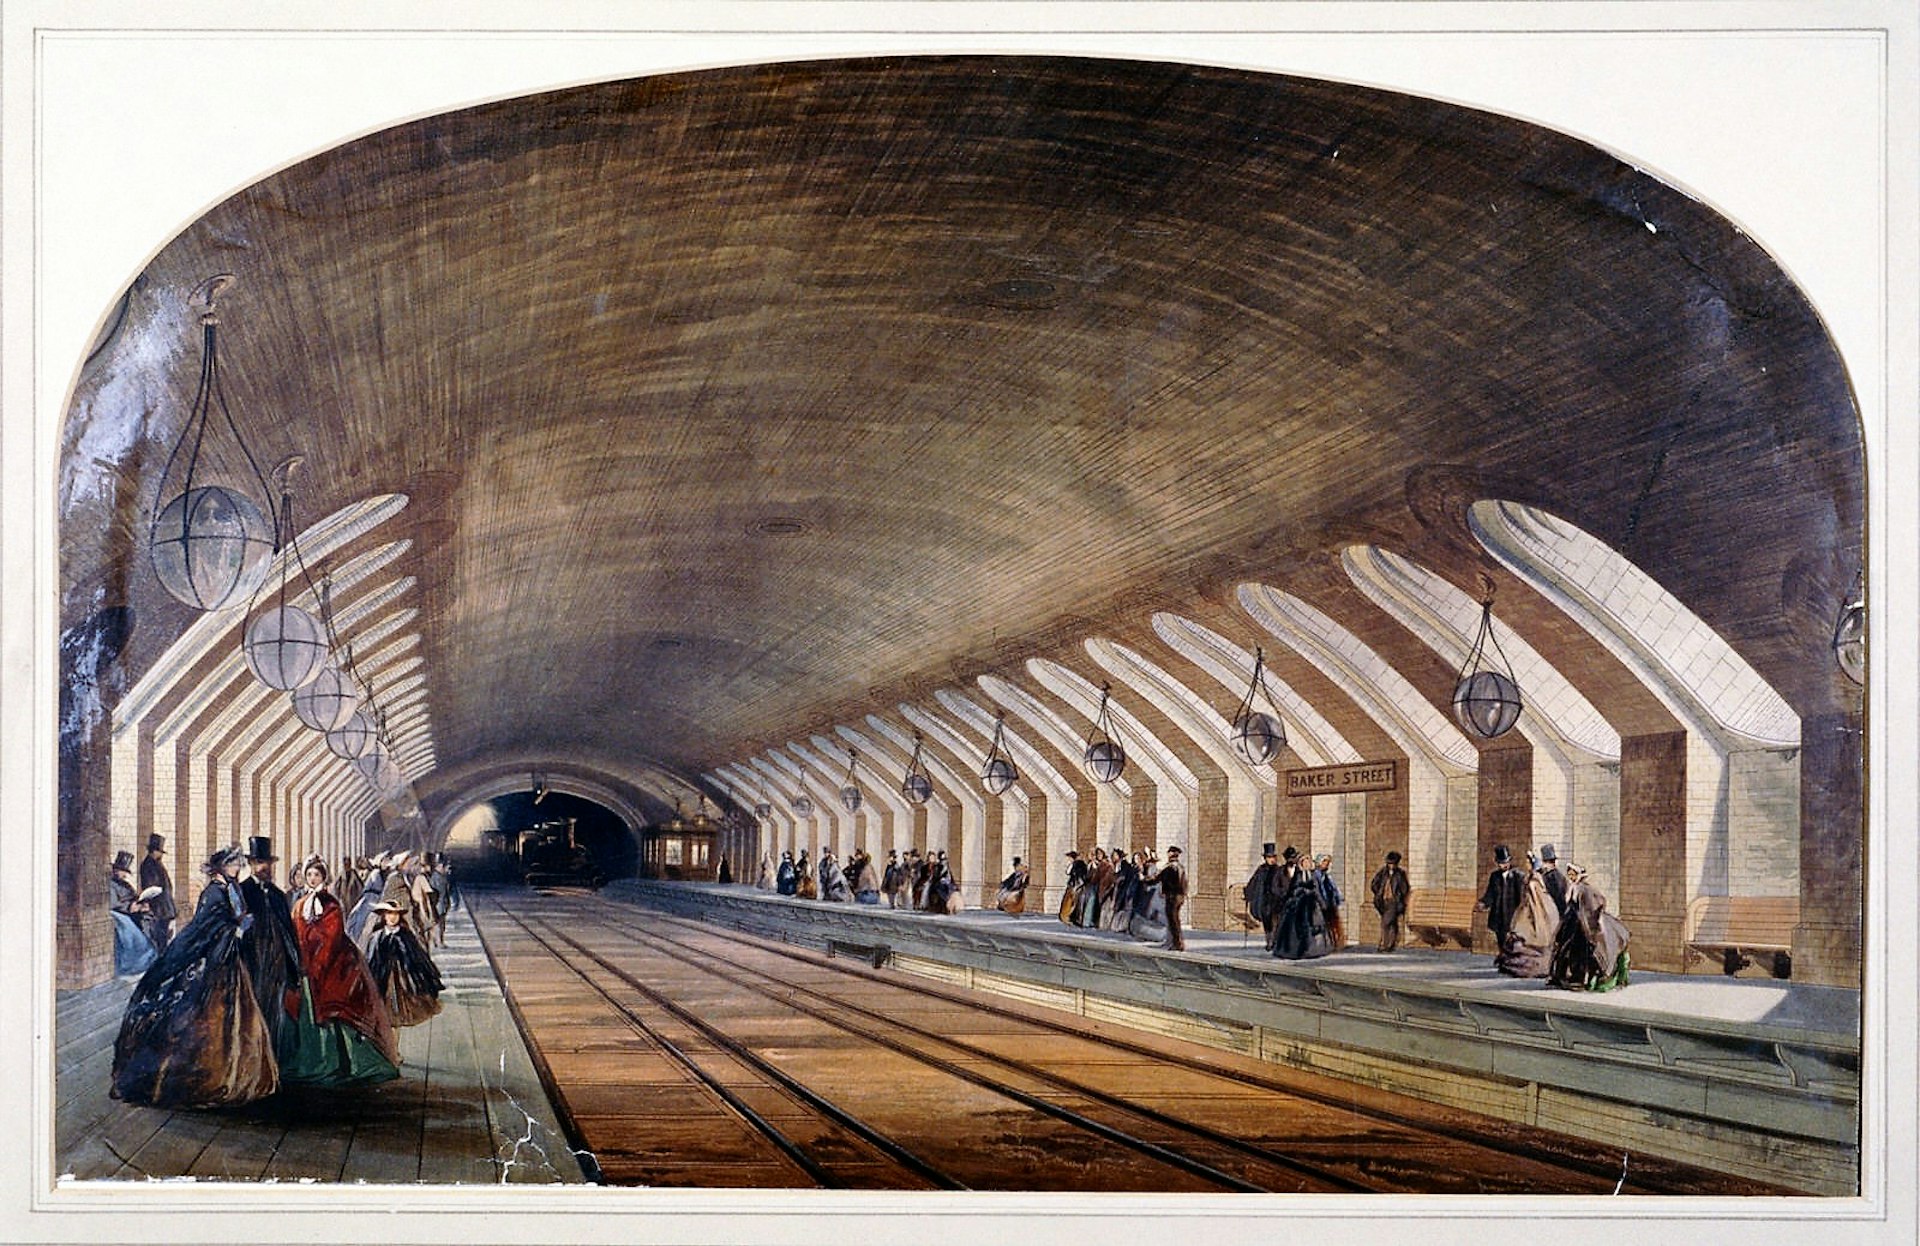 Baker Street Underground station has been around since the 1860s.